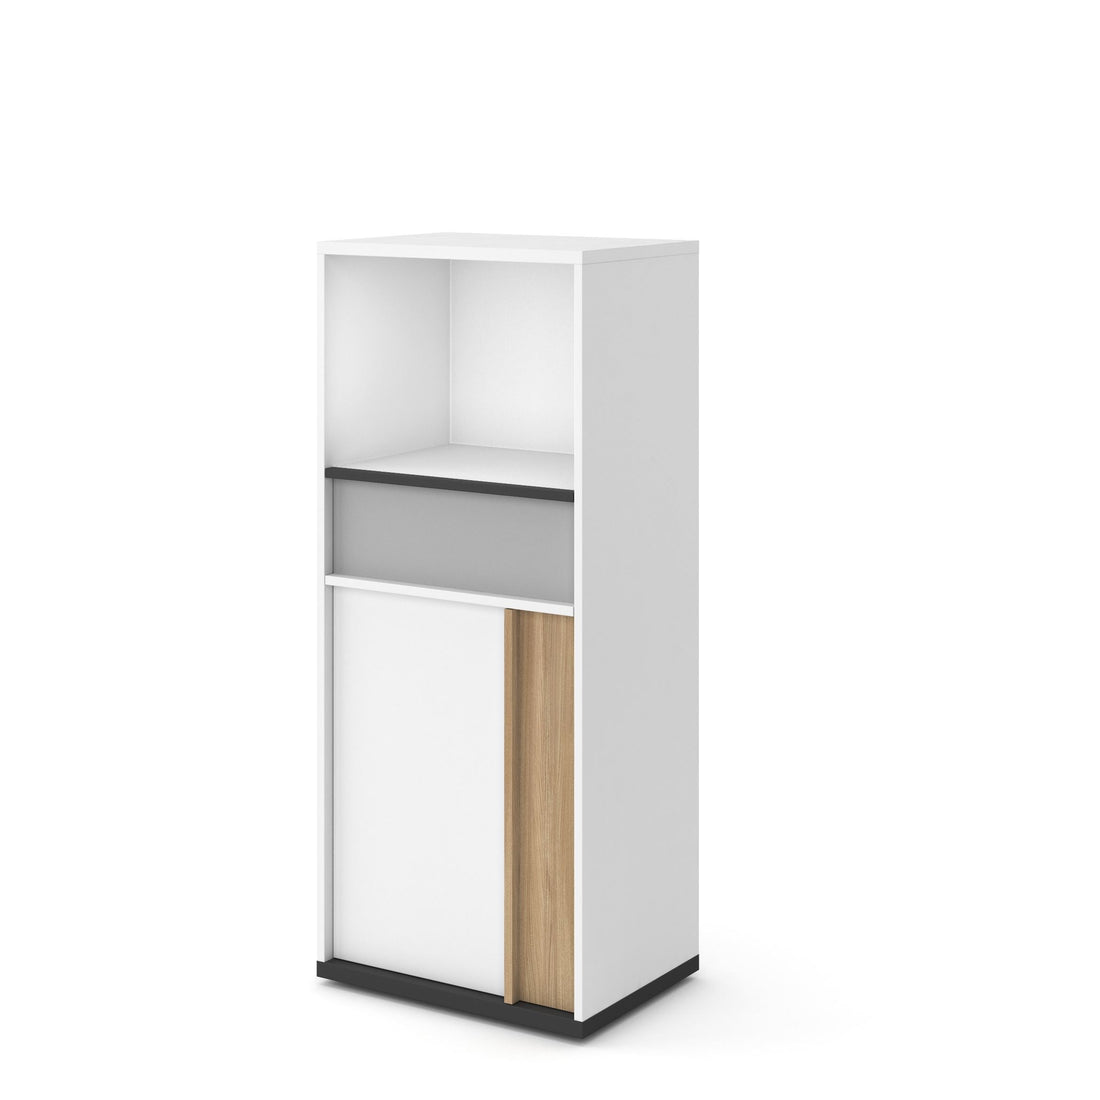 Imola IM-06 Sideboard Cabinet - £118.8 - Kids Sideboard Cabinet 